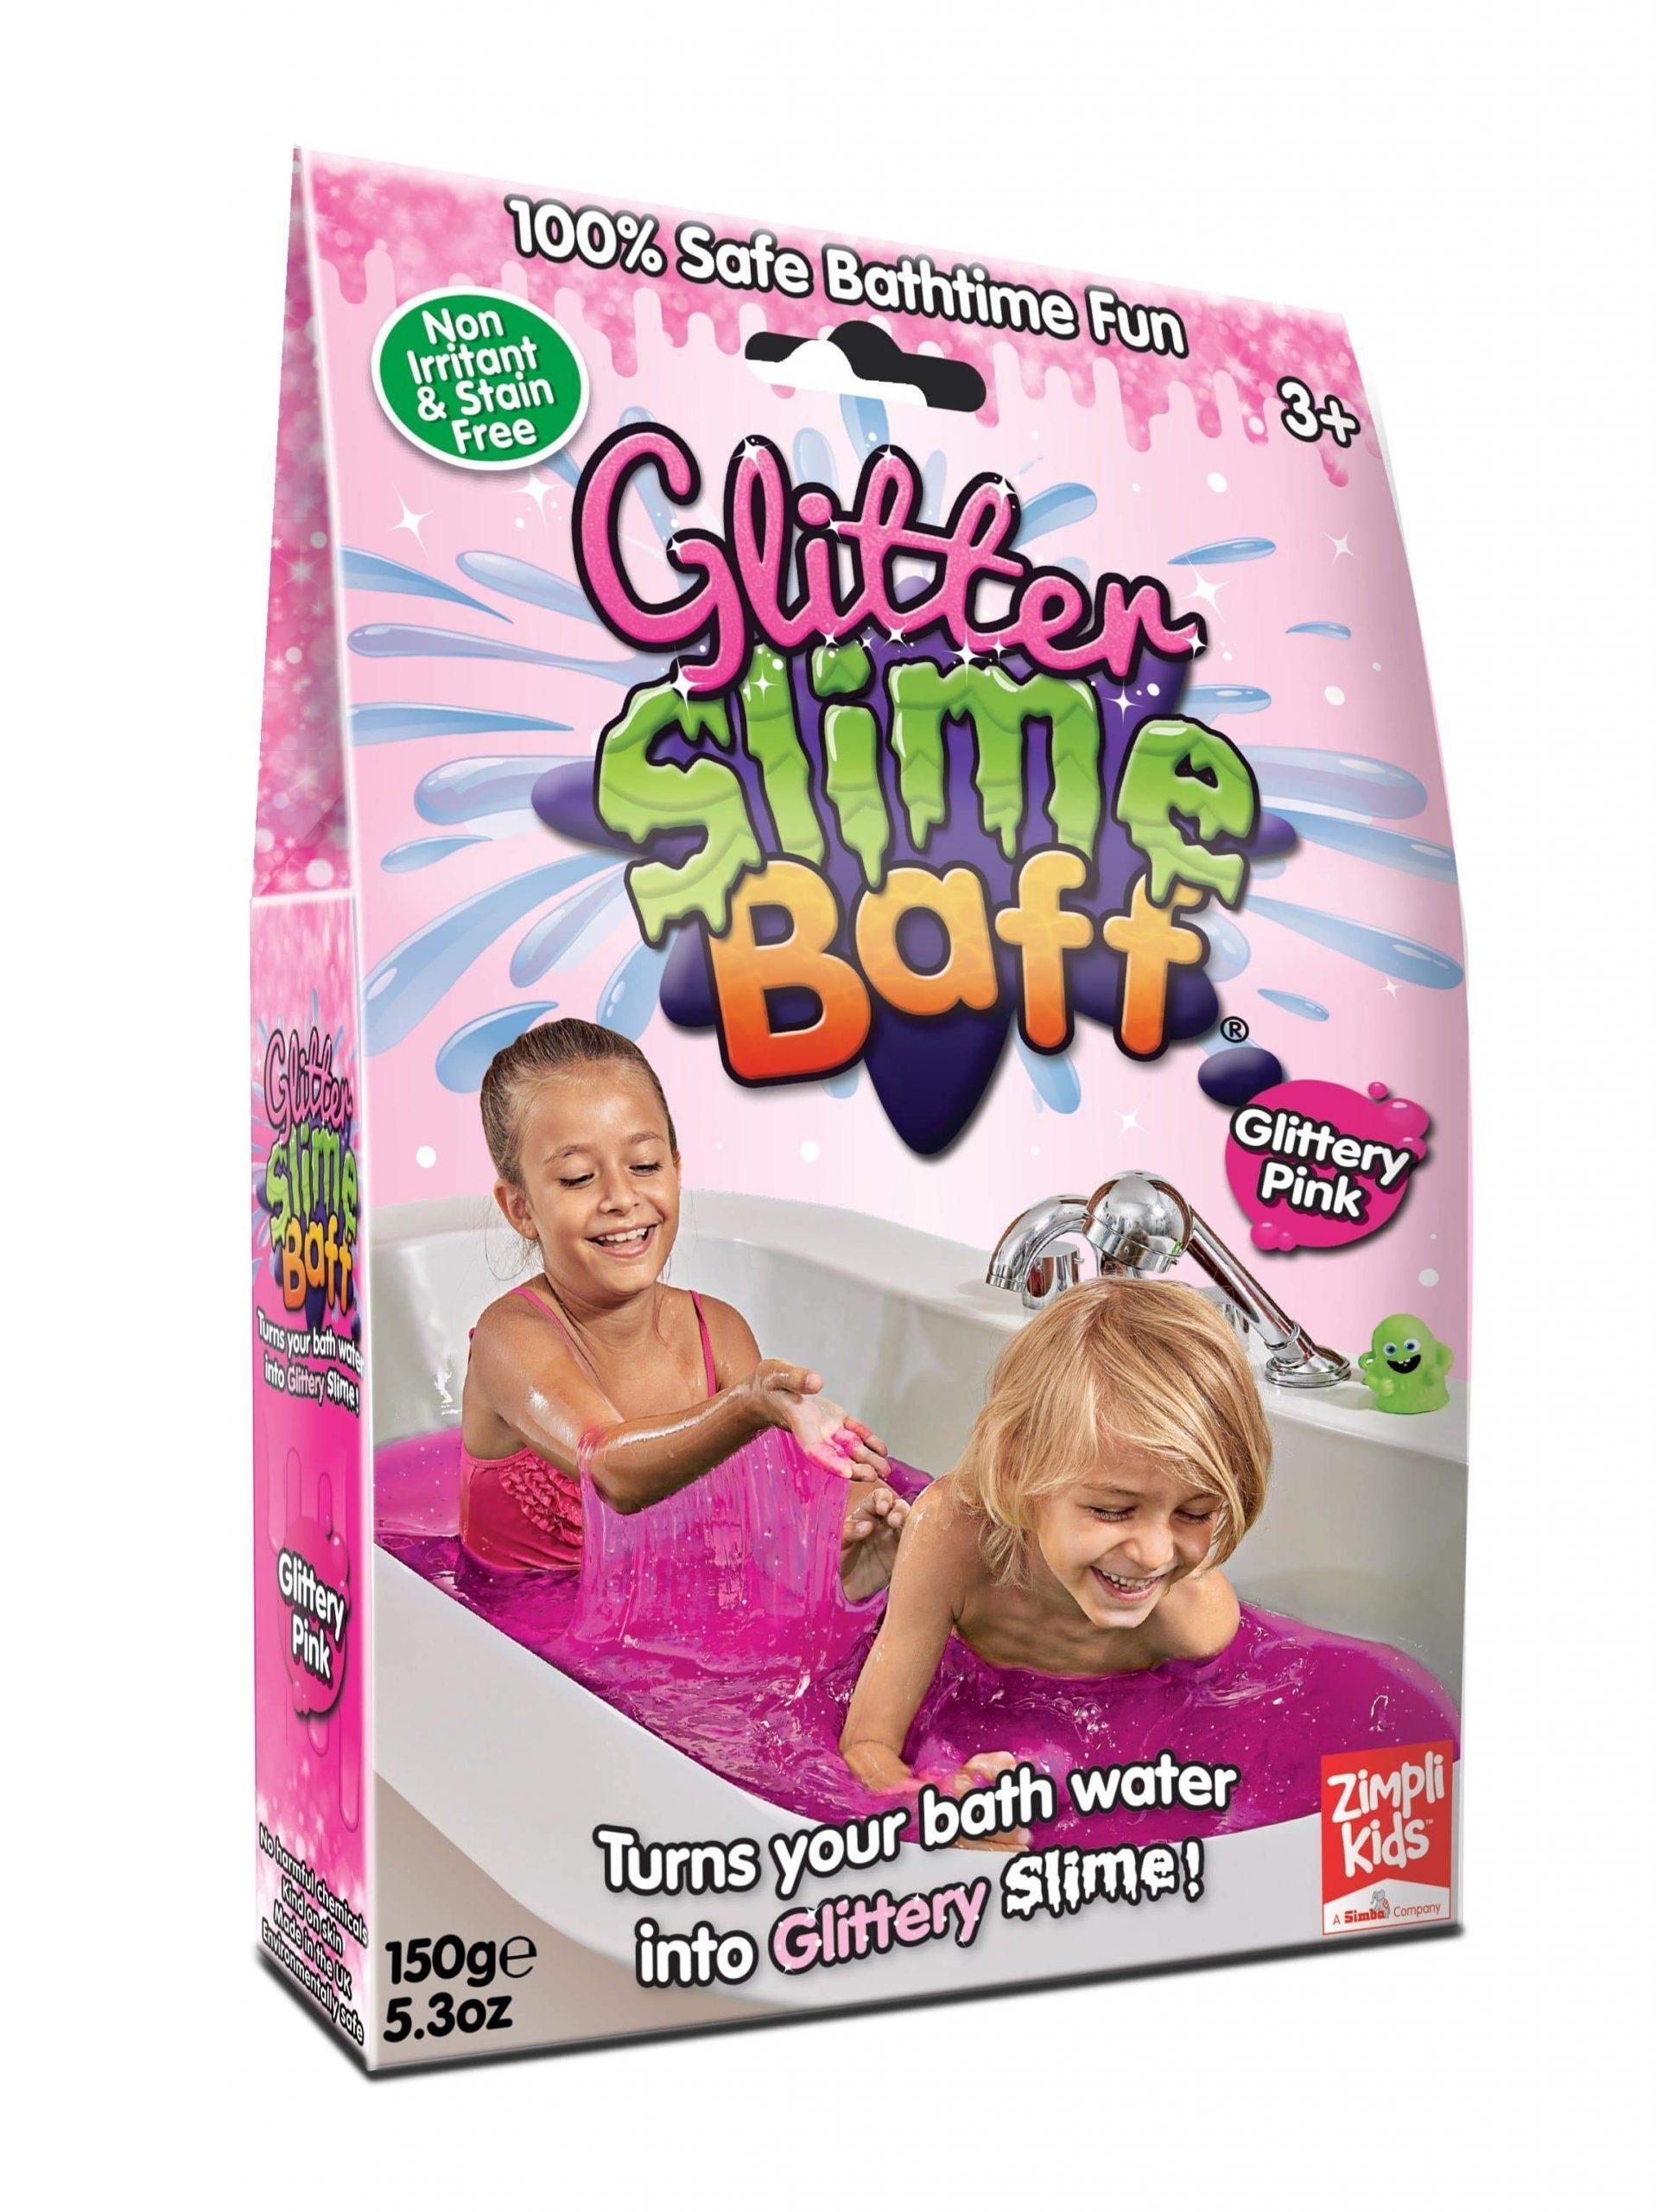 لعبة جيلي باف لامع وردي 150 جرام glibbi-Zimpli kids - Slime Baff Pink